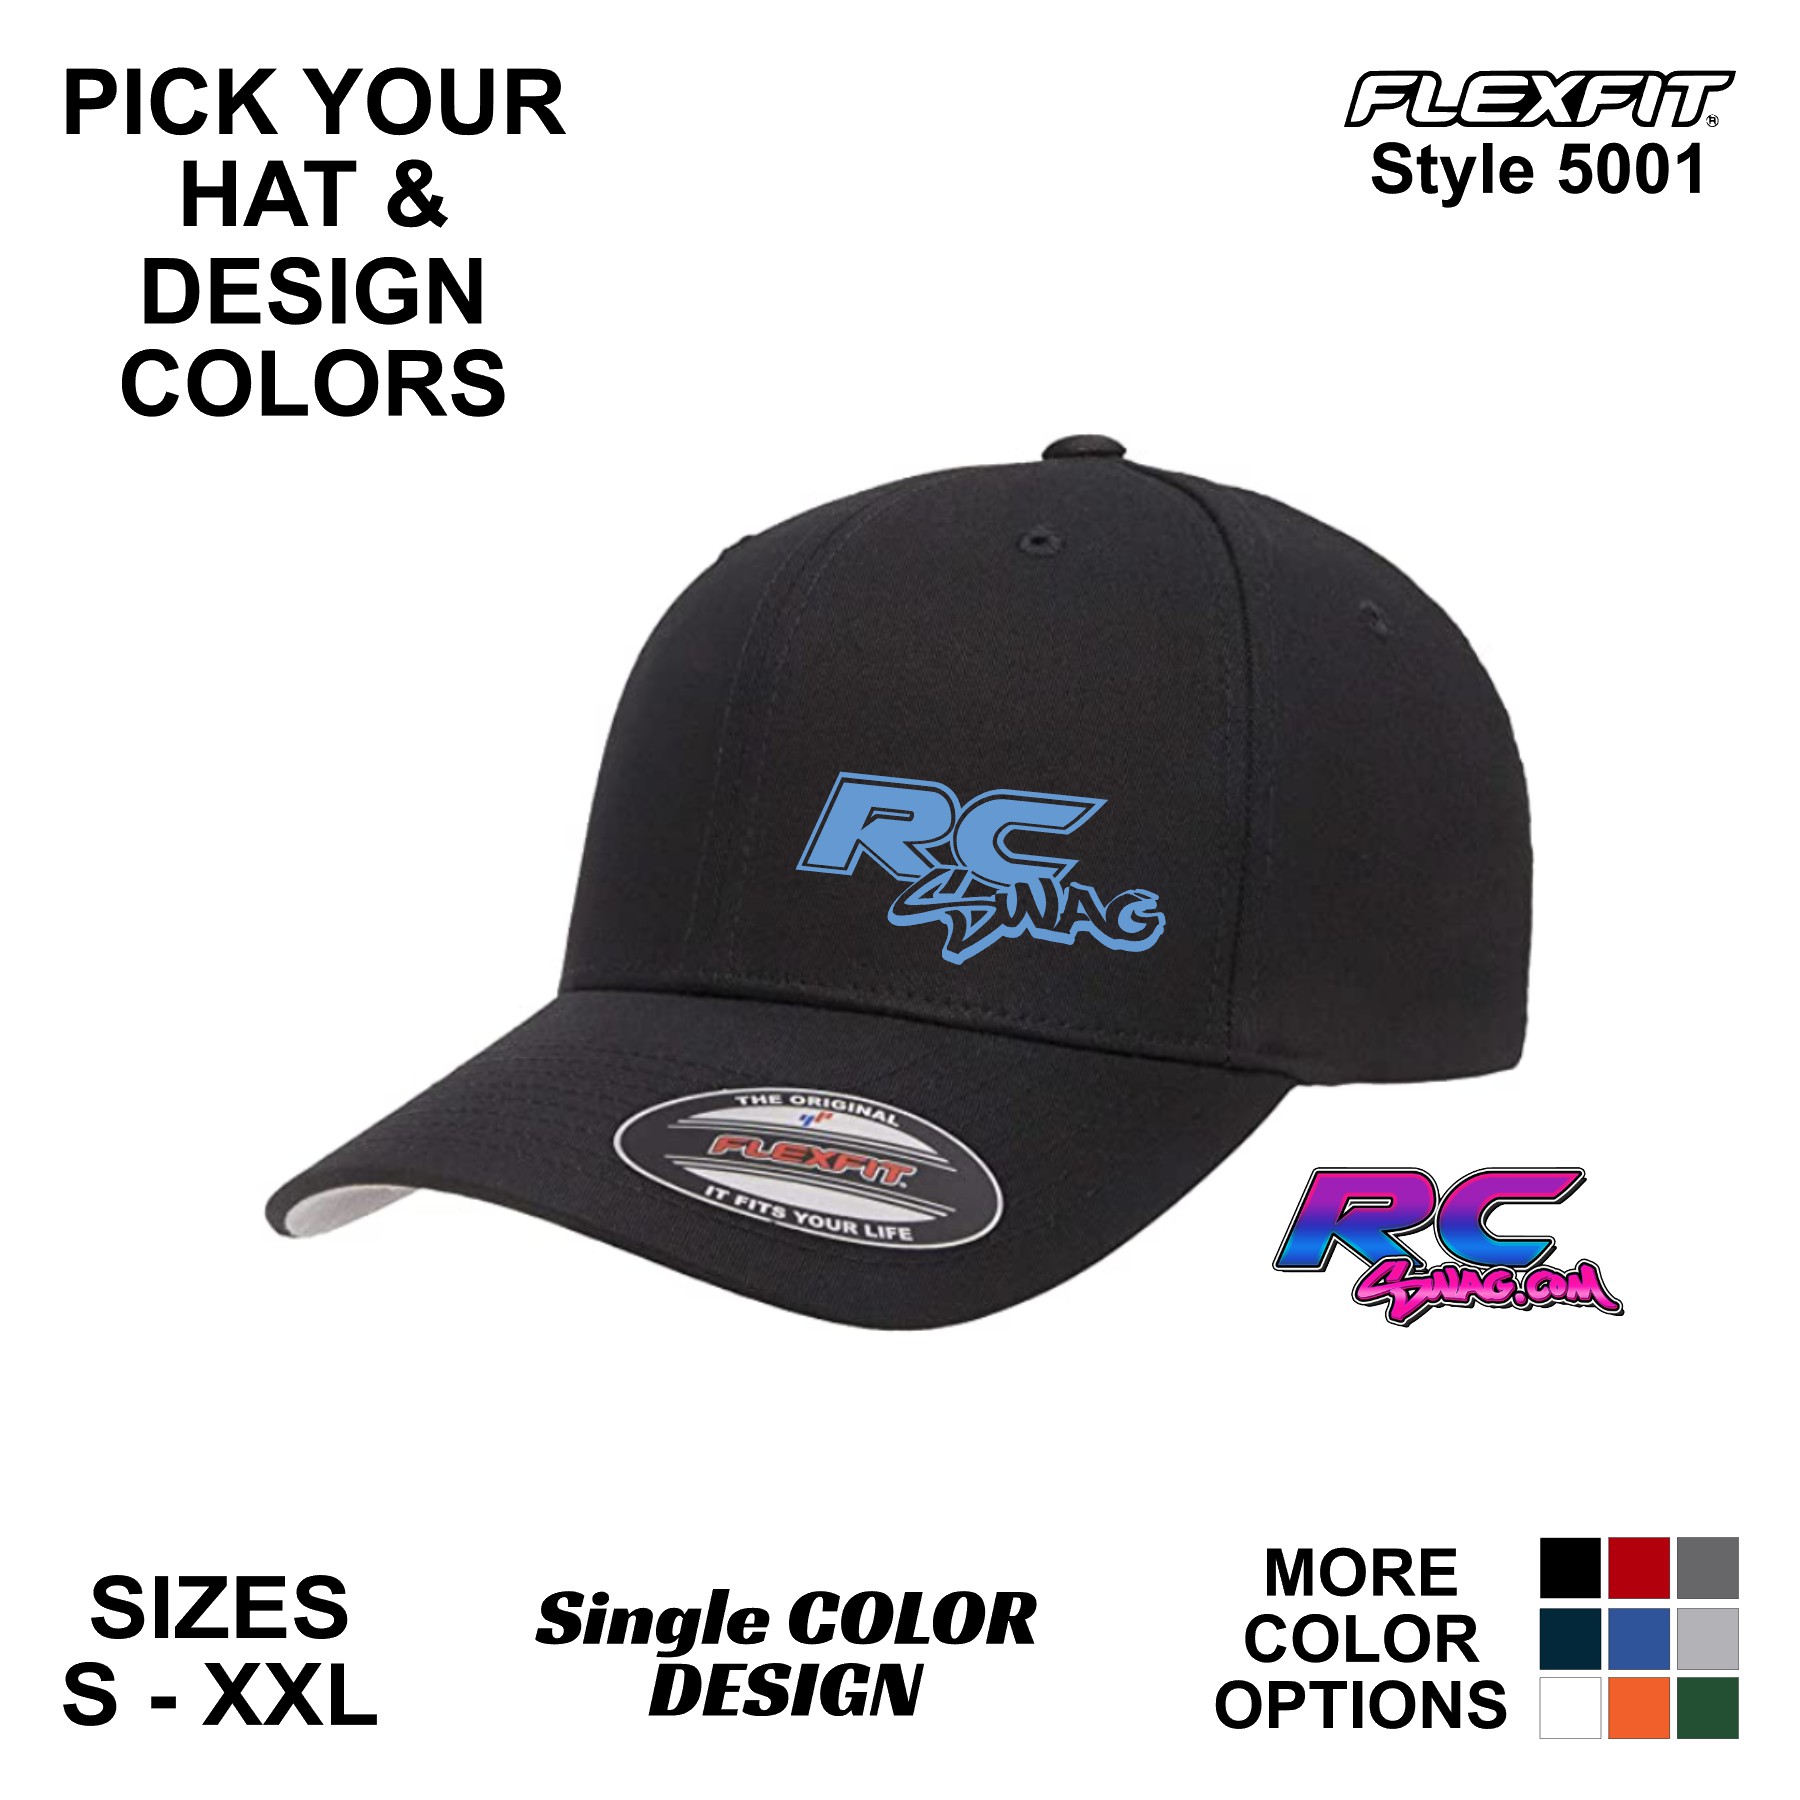 Flex Fitted Baseball Cap Hat - Navy Blue, Small-Medium